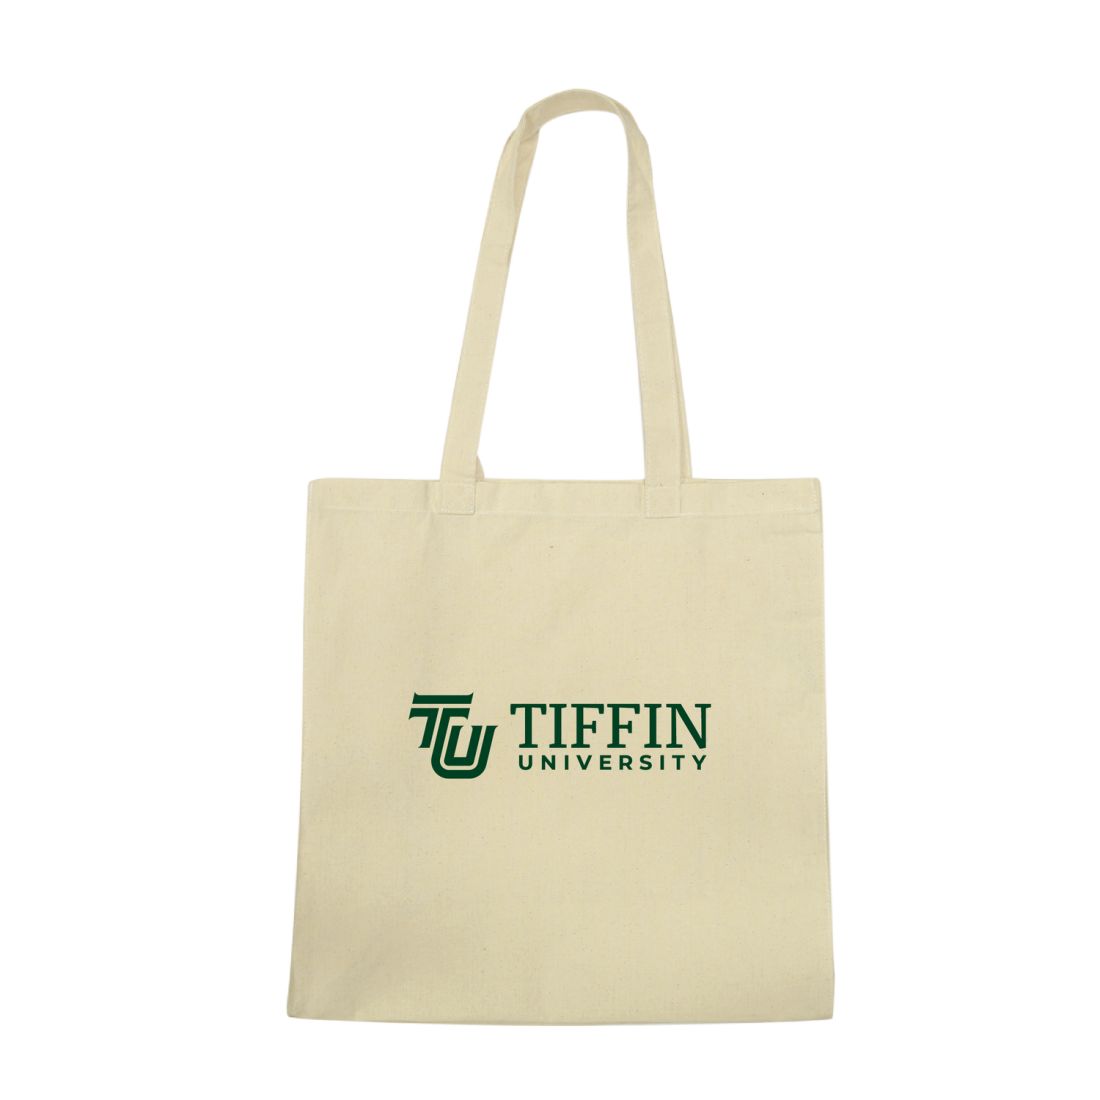 Tiffin University Dragons Institutional Tote Bag